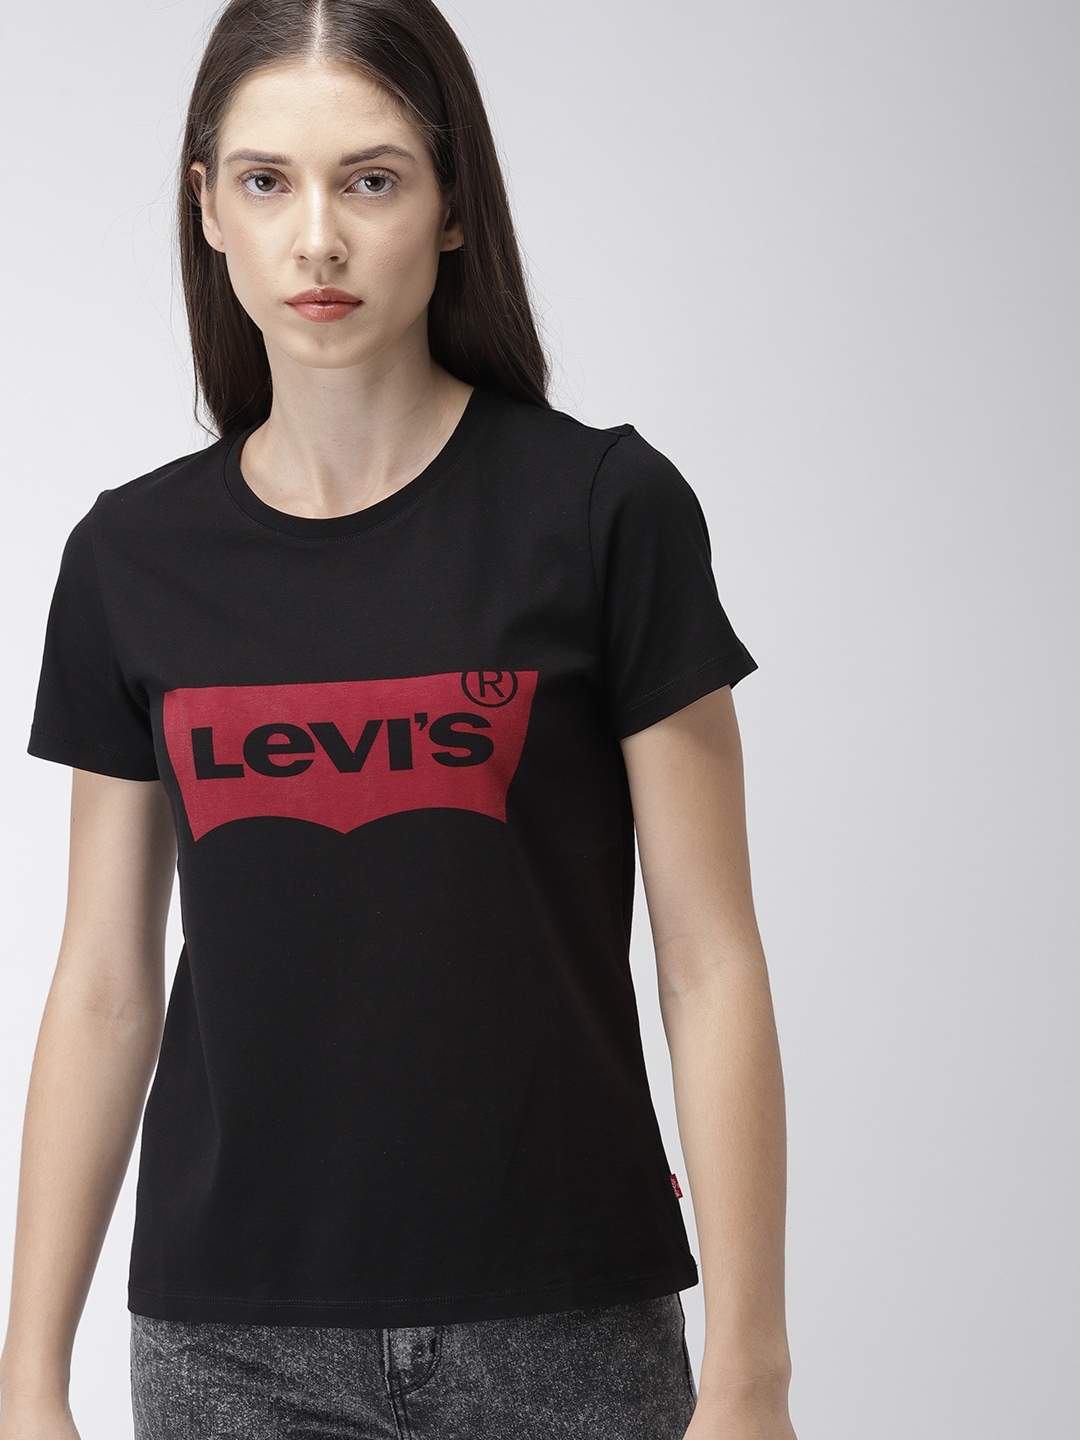 levis black shirt womens